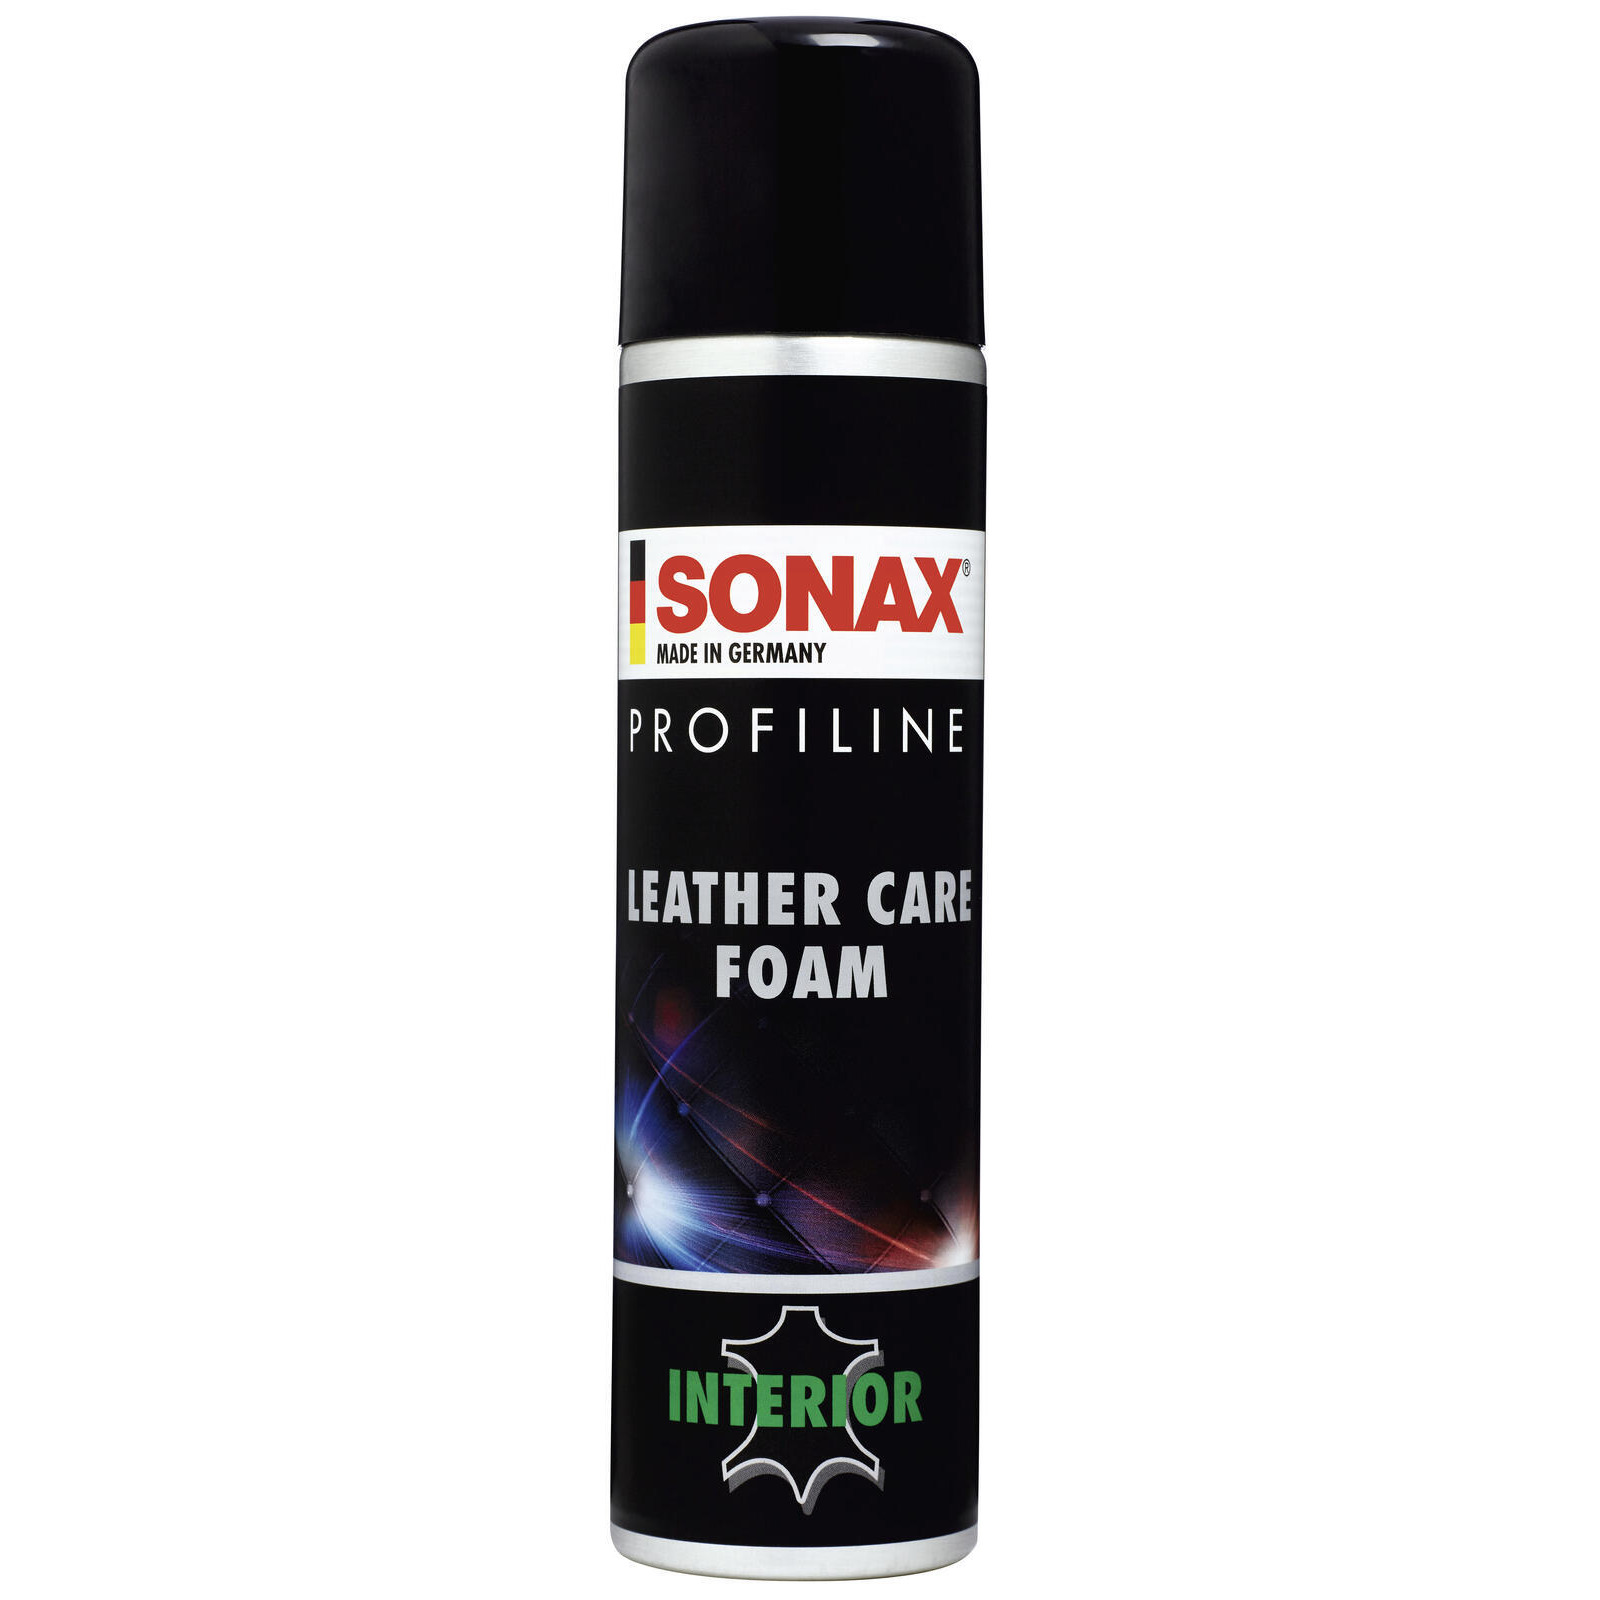 SONAX Lederpflegemittel PROFILINE Leather Care Foam